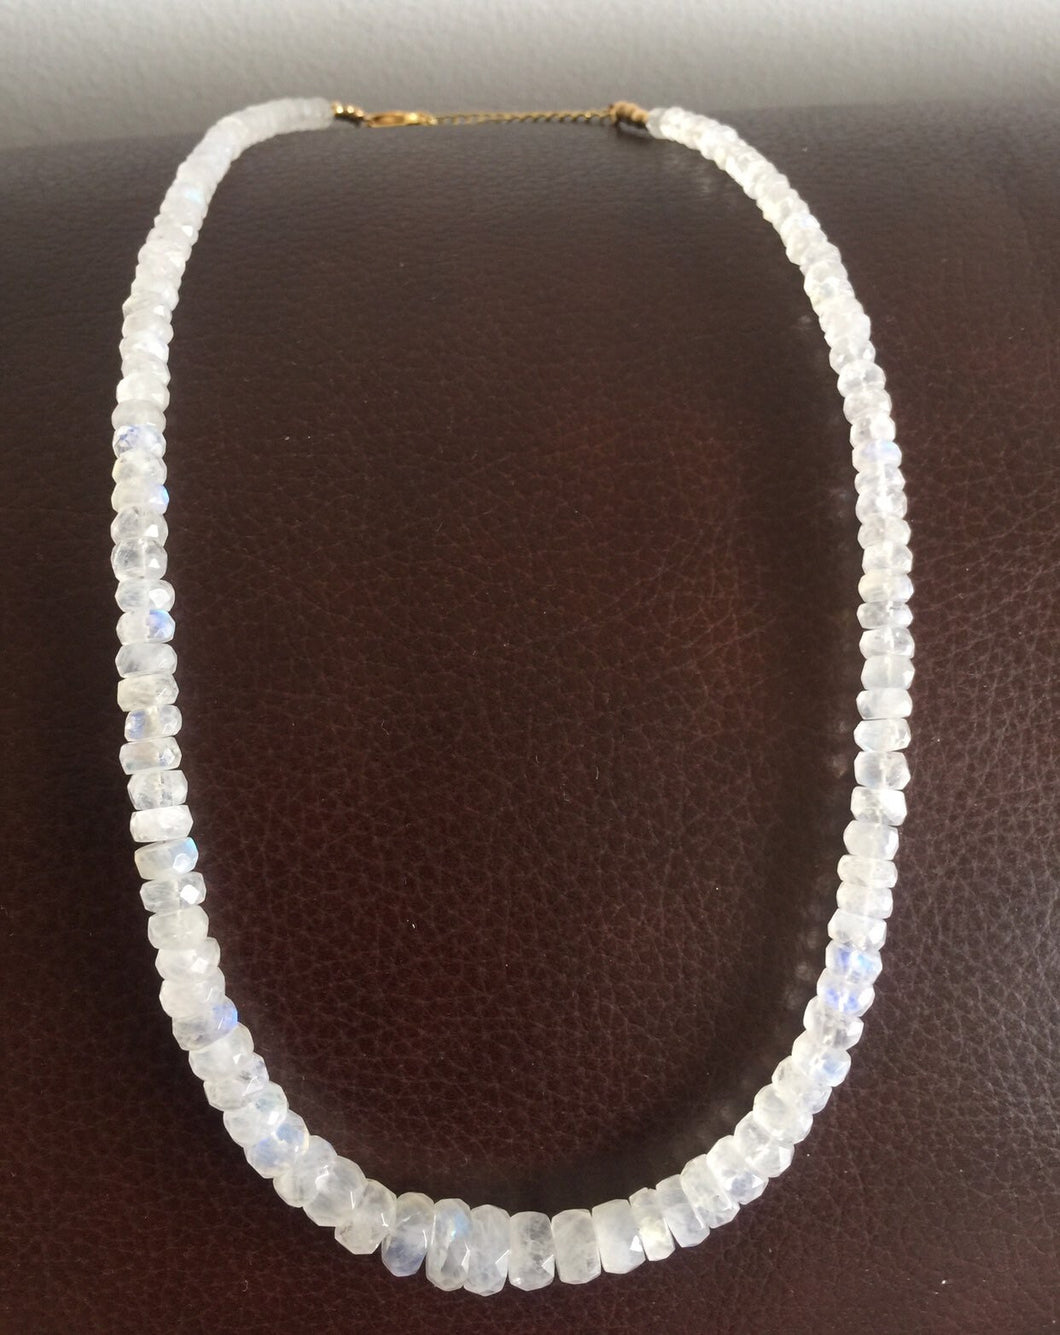 stone beads necklace,moonstone necklace,white moonstone necklace,silver necklace, sterling silver necklace ,cut stone necklace